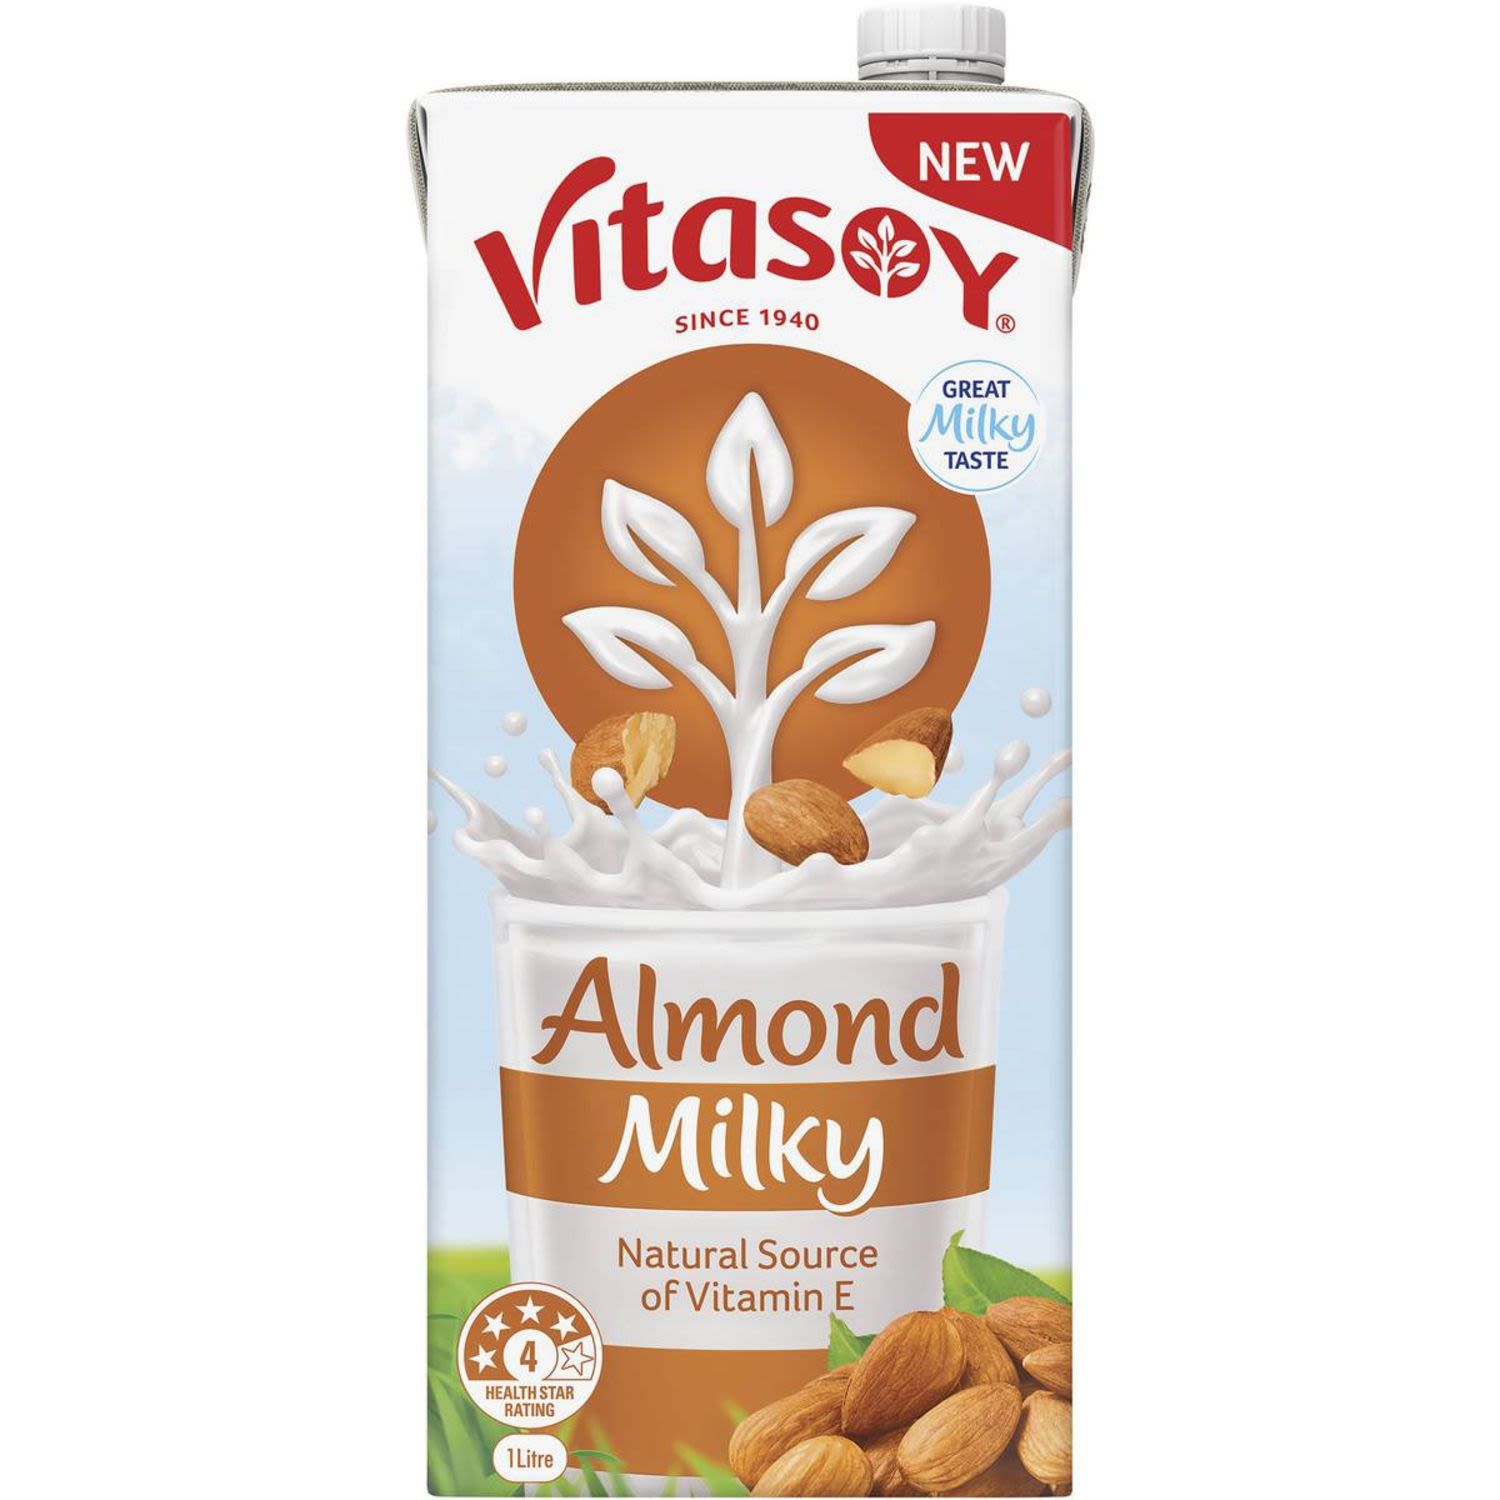 Vitasoy Almond Milky, 1 Litre